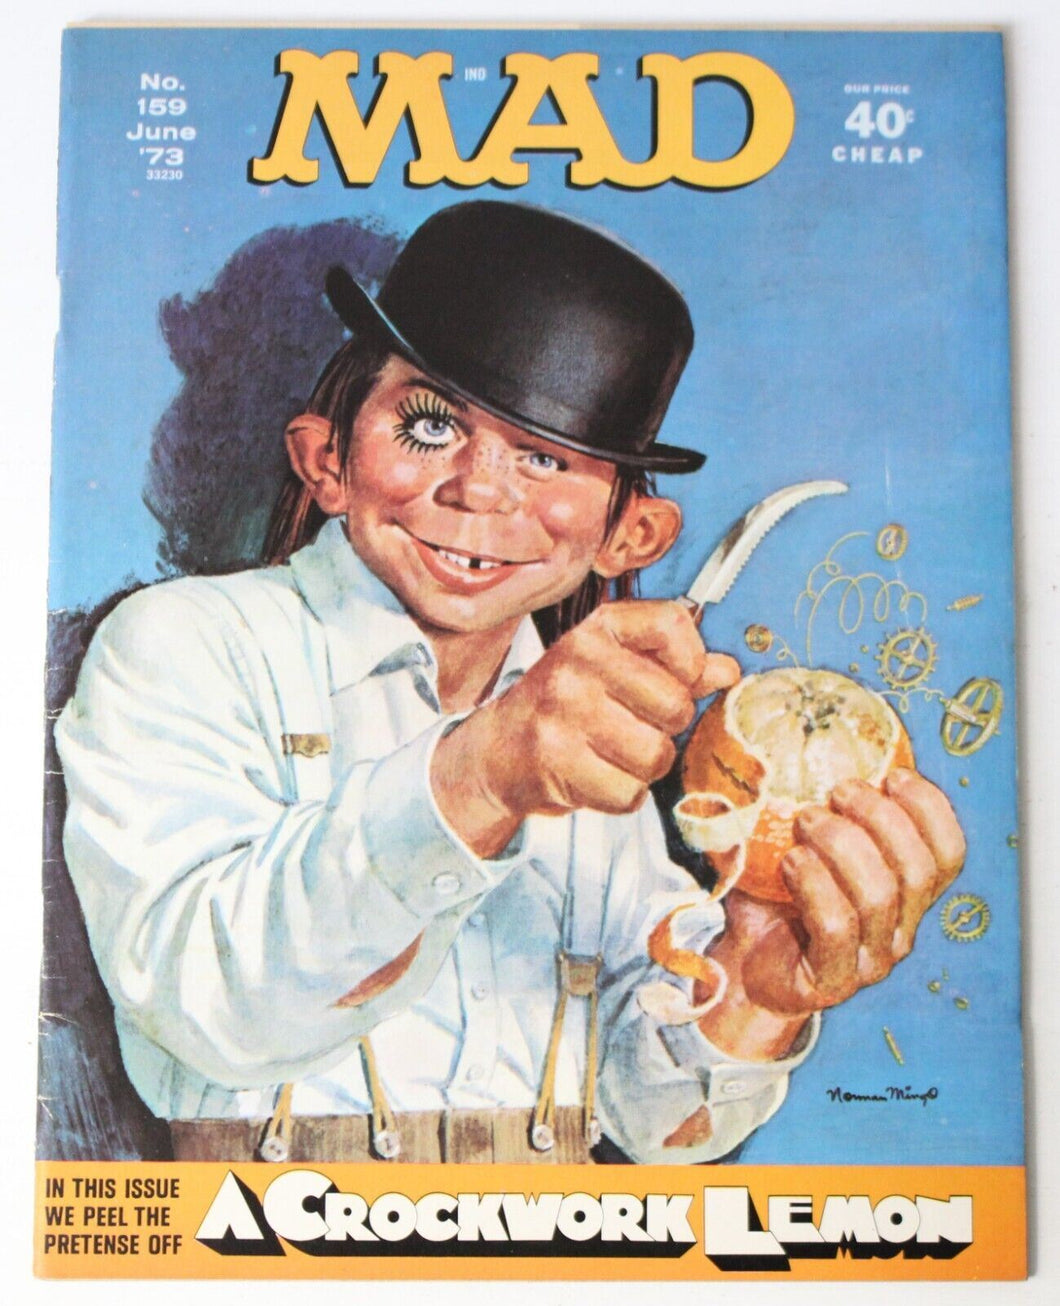 Mad (June 1973) #159